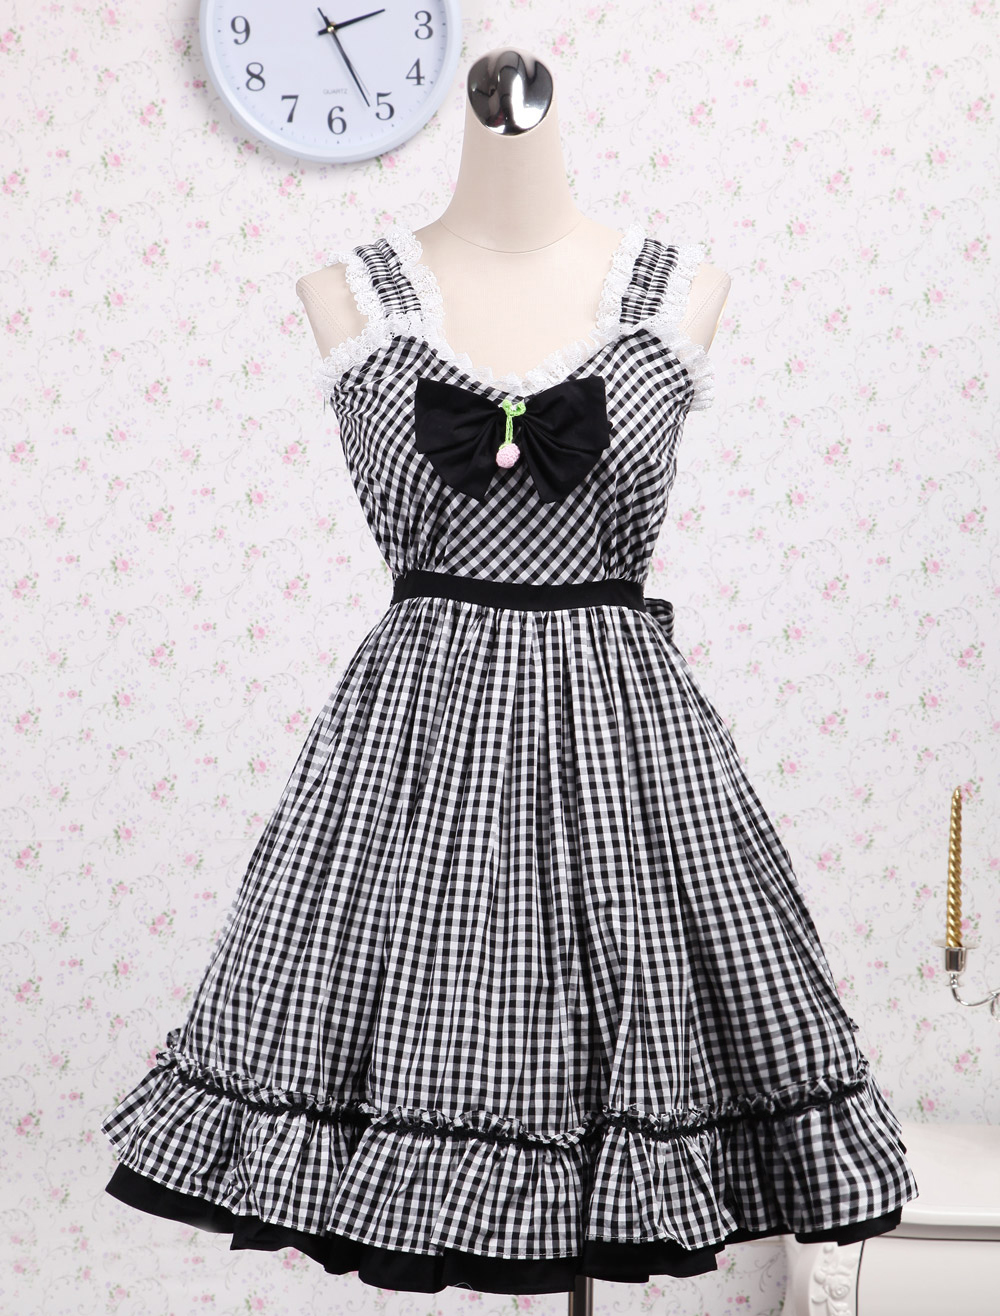 Black and White Cute Bow School Lolita Dress